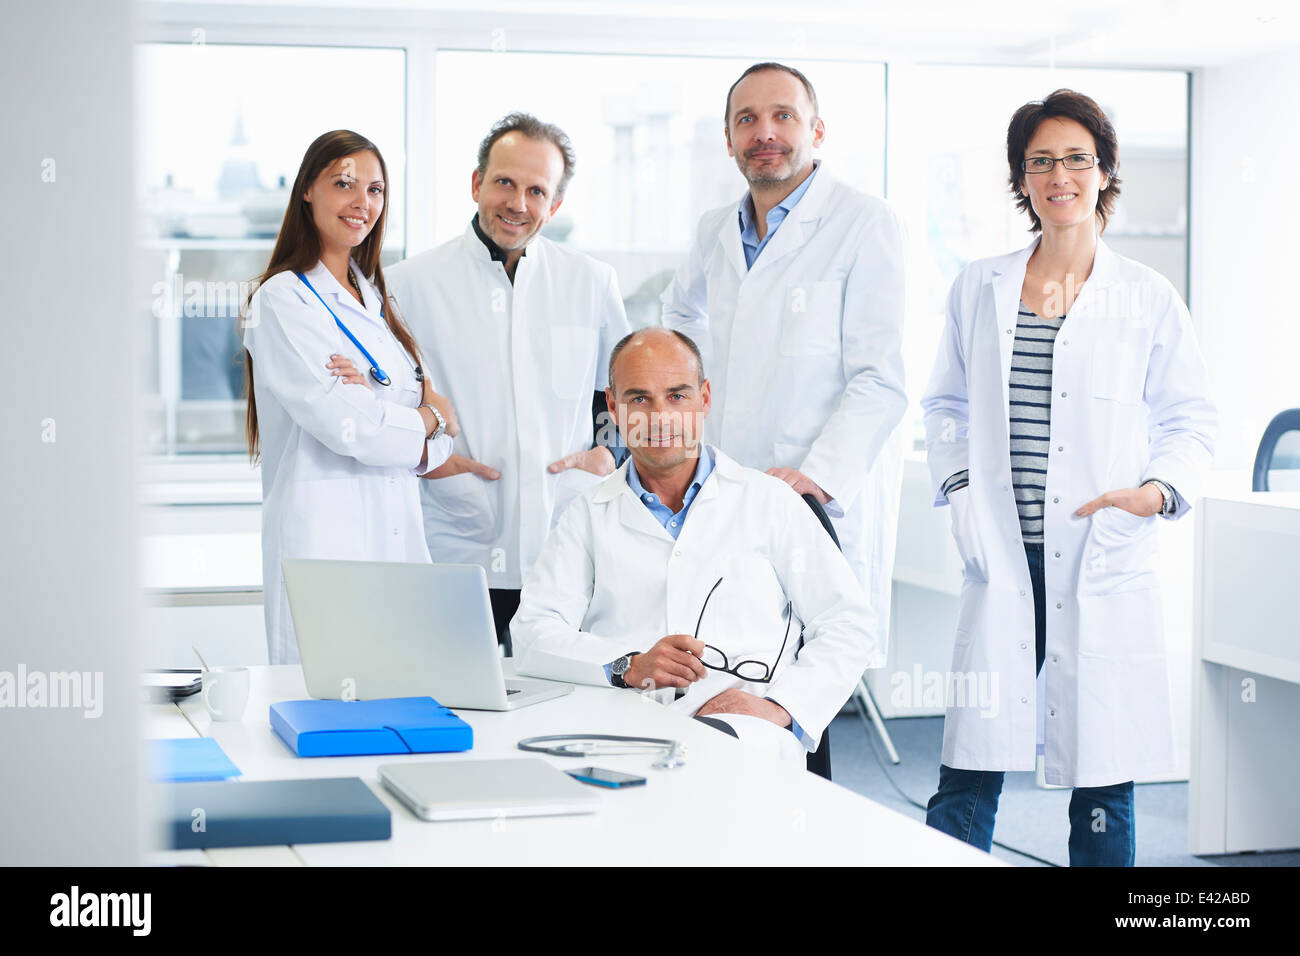 Doctors posing for group portrait Stock Photo